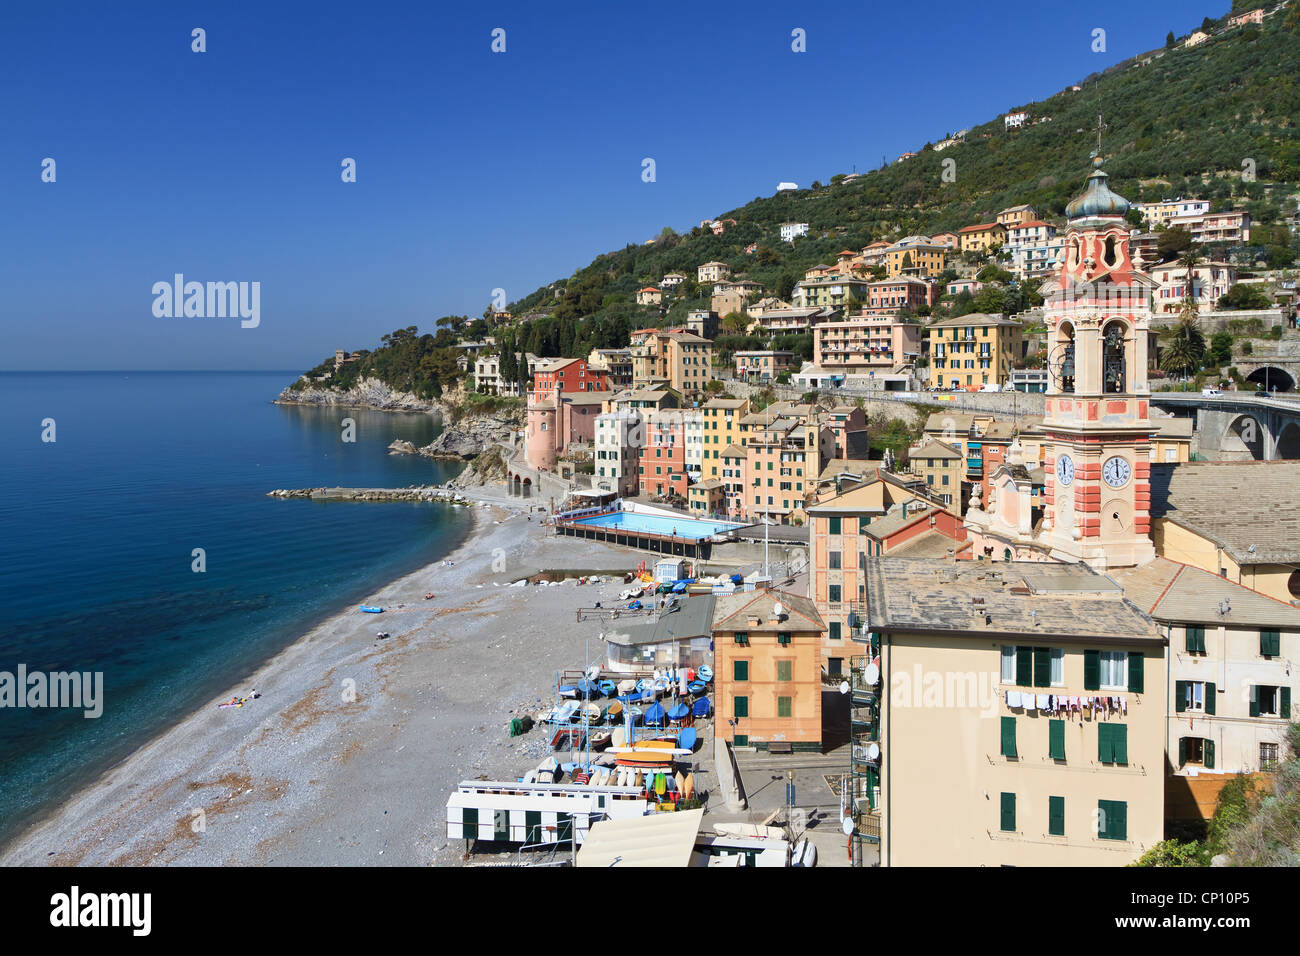 off season view of Sori, small town in Liguria, Italy Stock Photo